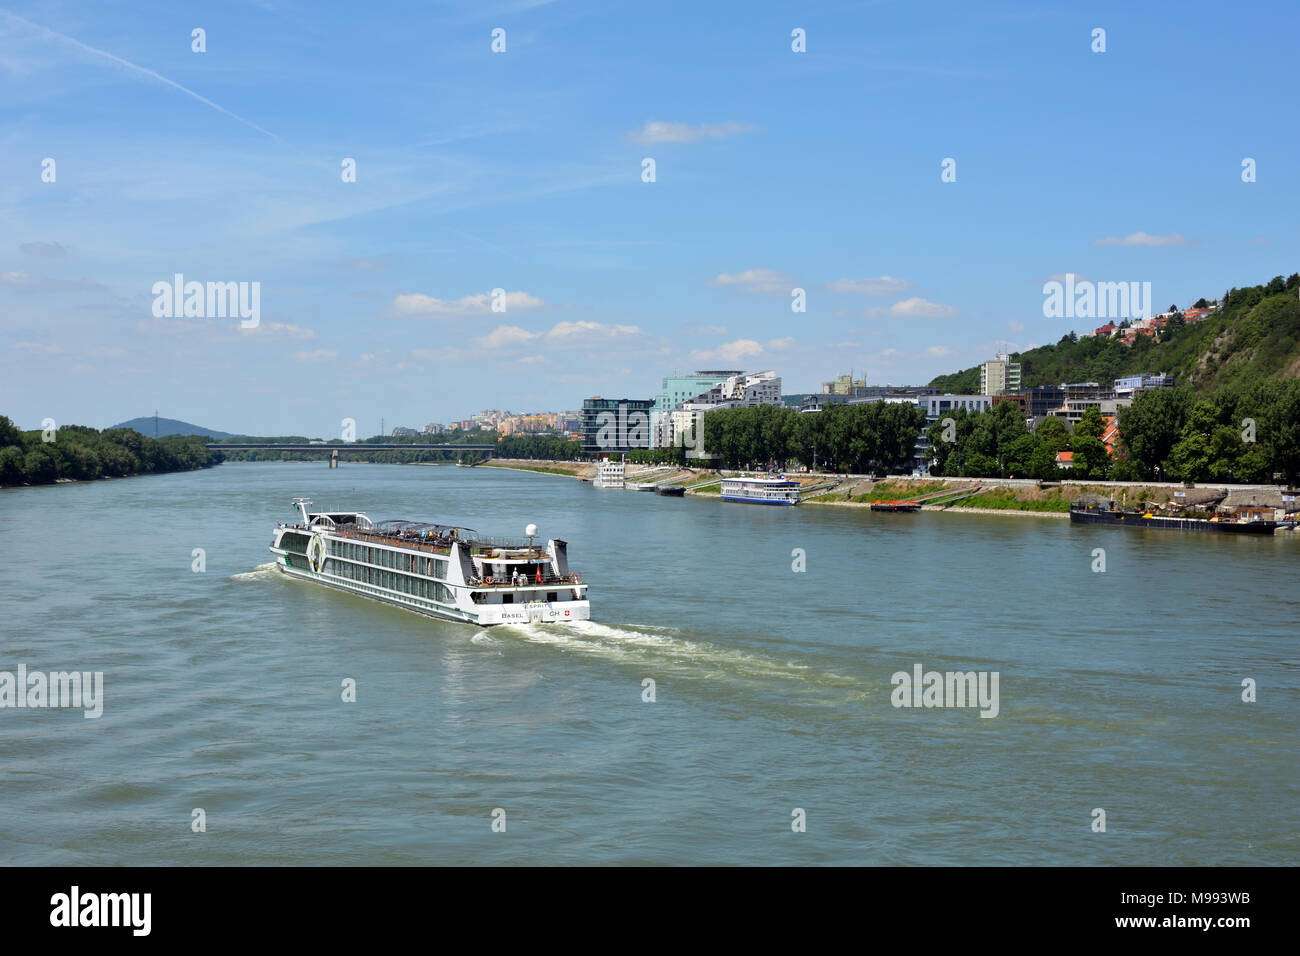 Bratislava, Slovakia - June 14, 2017: Passenger ship on the Danube in the Slovak capital Bratislava - Slovakia. Stock Photo